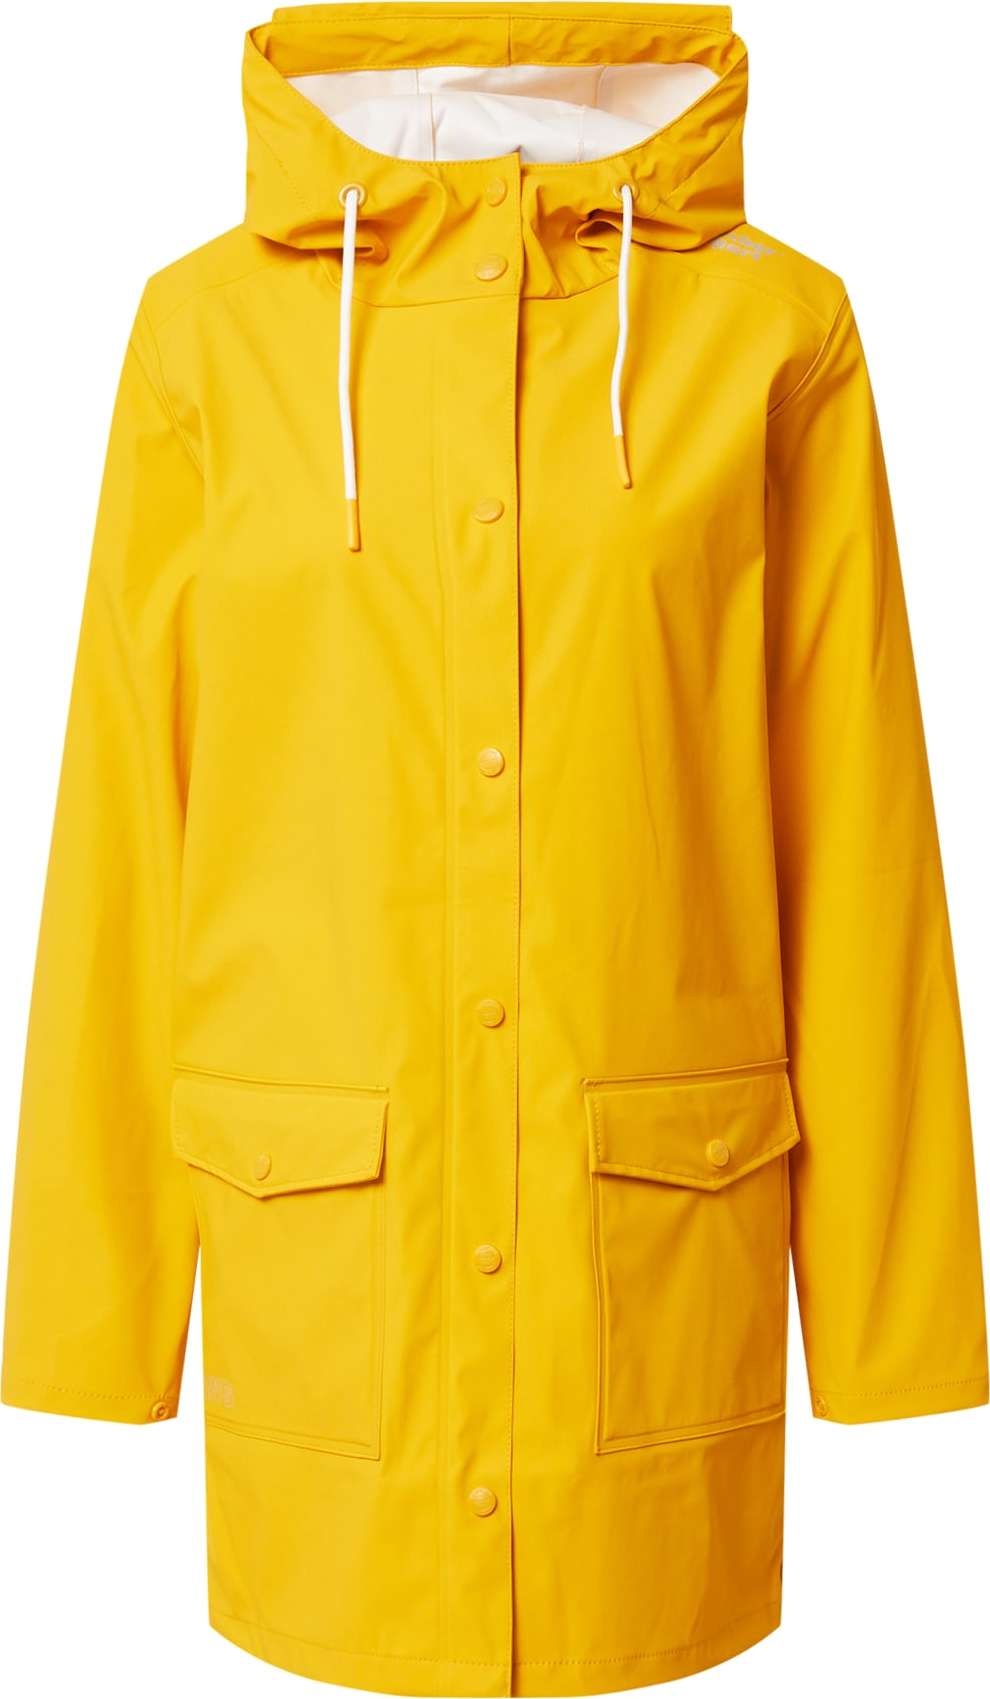 Weather Report Outdoorový kabát 'Tass' žlutá / bílá